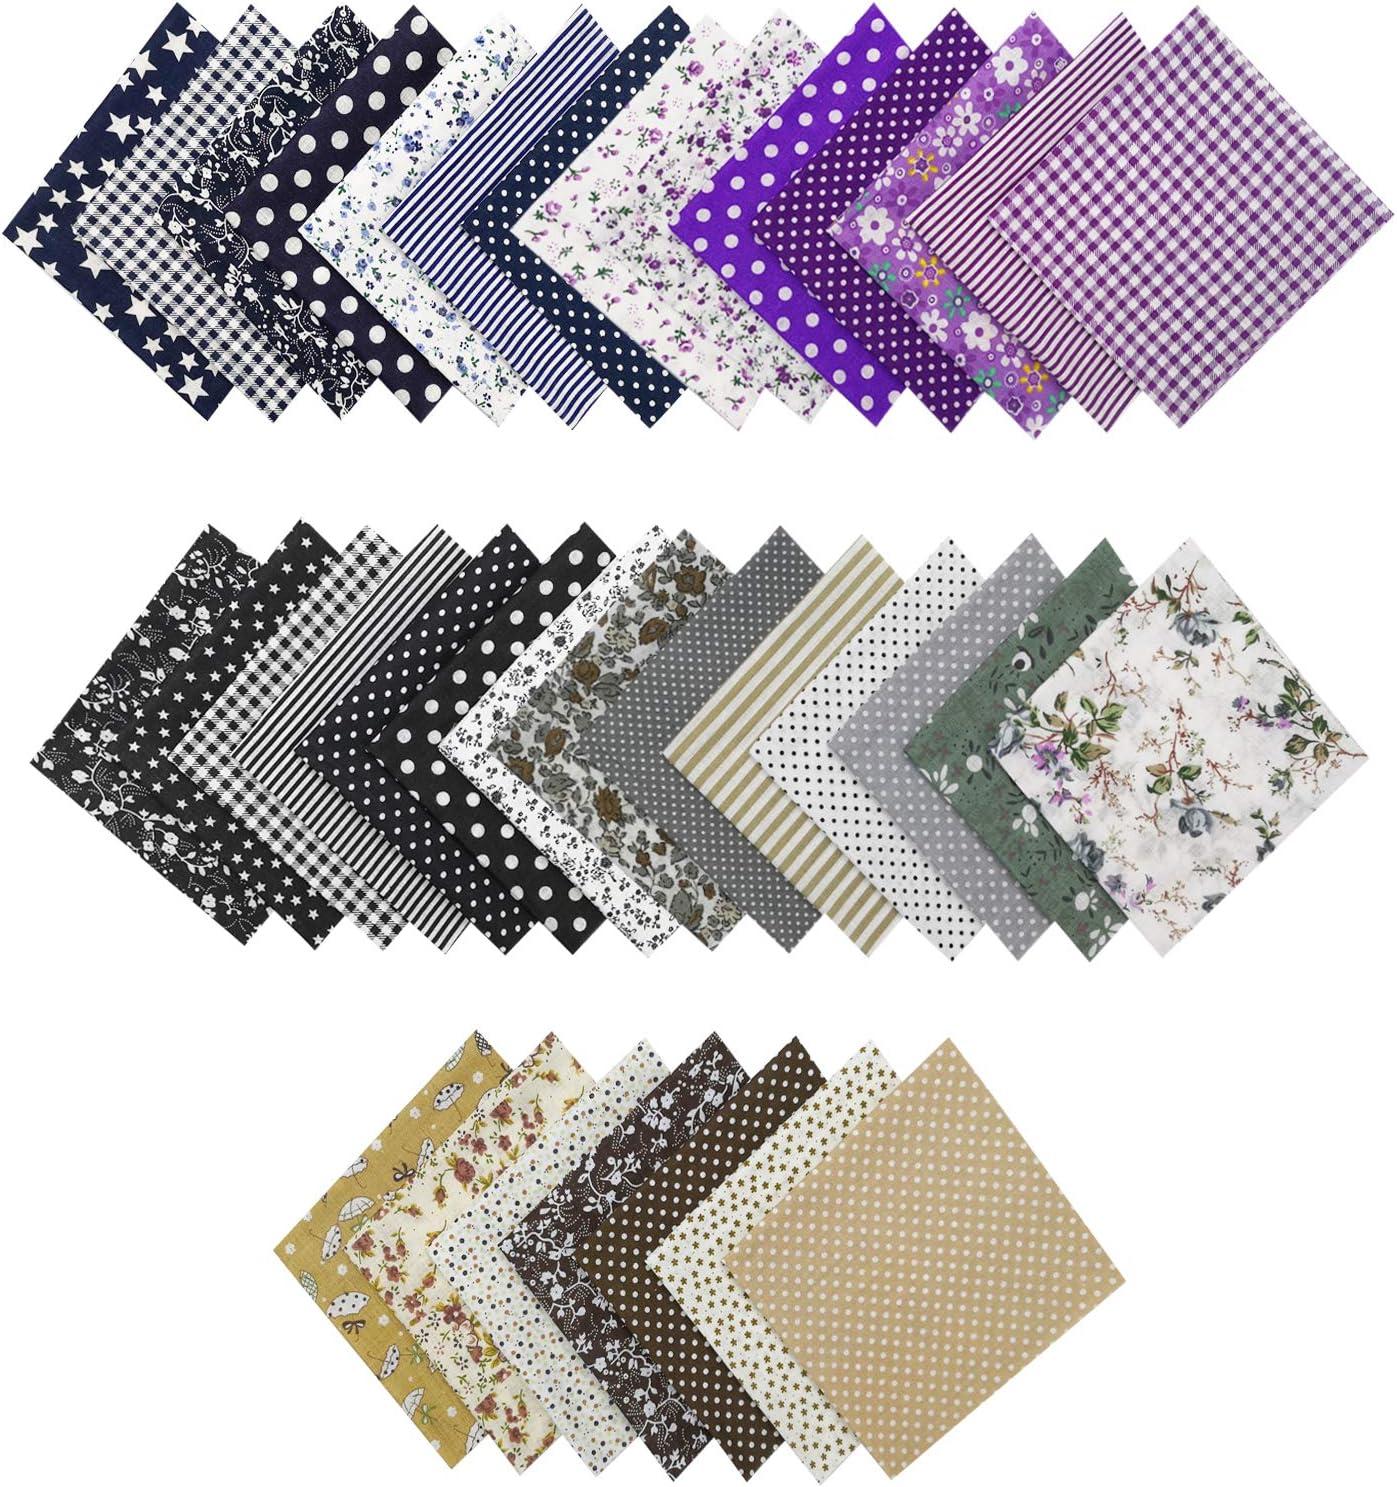 Chris.W 35Pcs Quilting Fabric Squares Sheets, 10x10 Cotton Craft